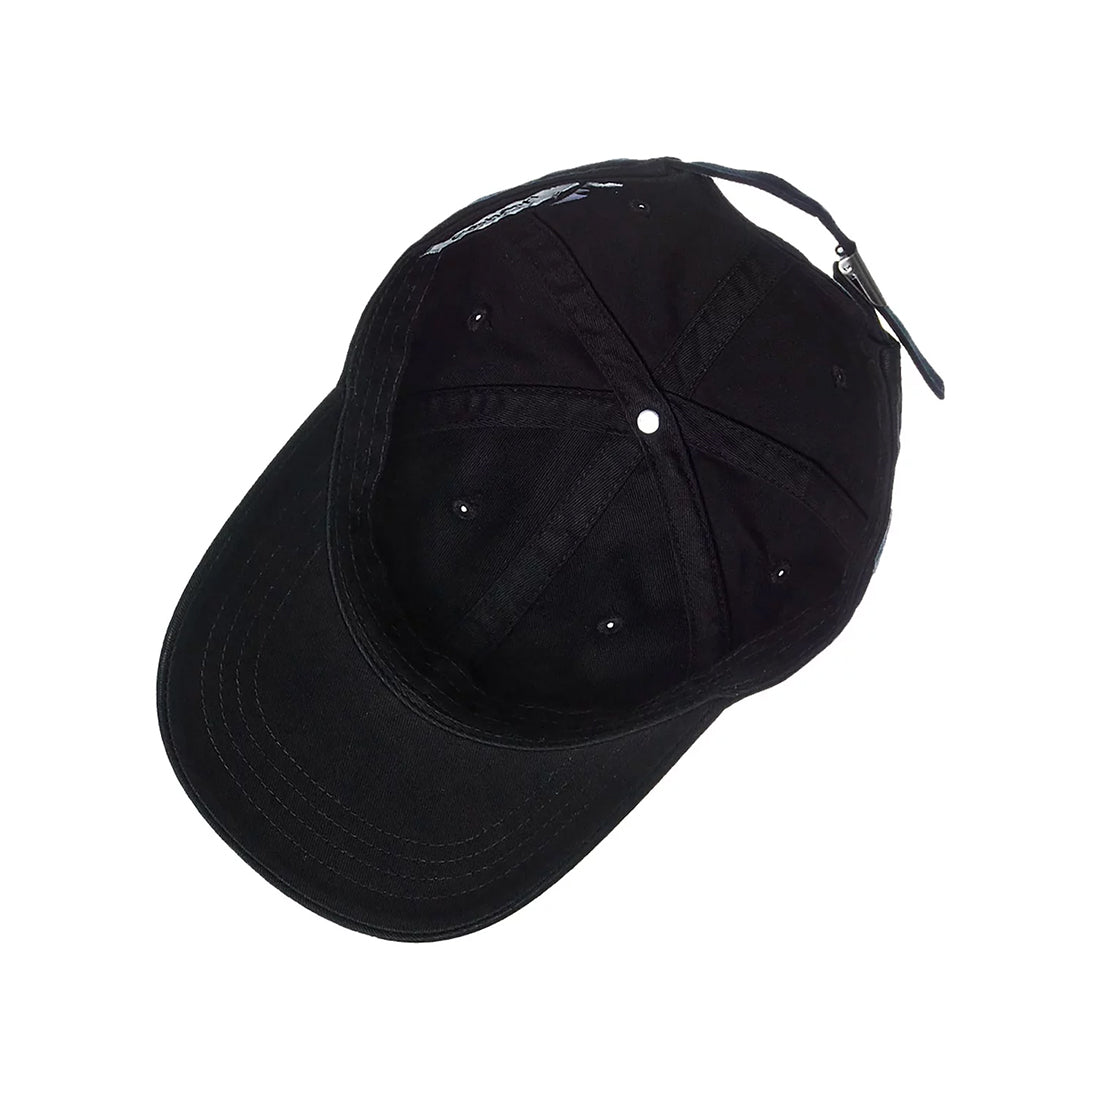 Safety Pin Cap - Black/White